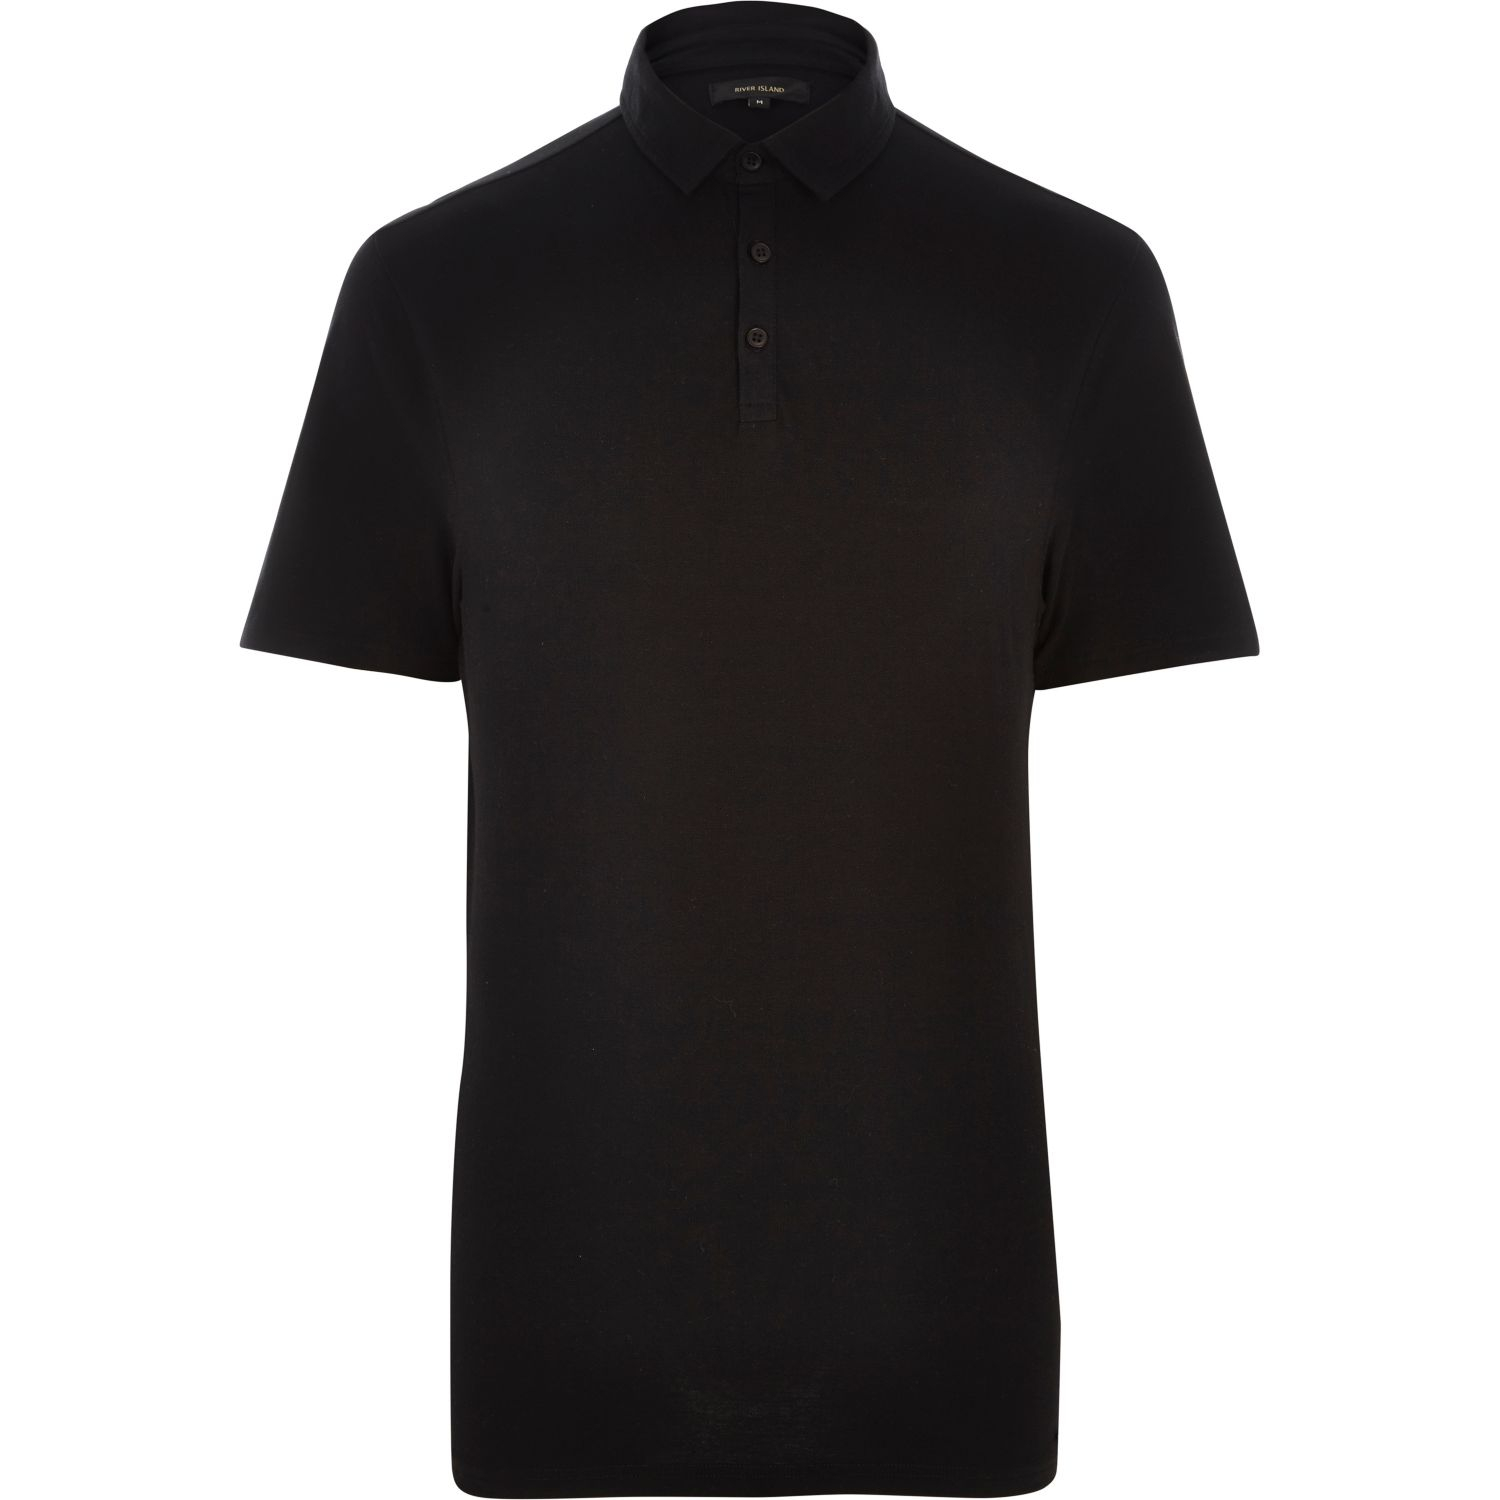 Lyst - River Island Black Longer Length Zip Side Polo Shirt in Black ...